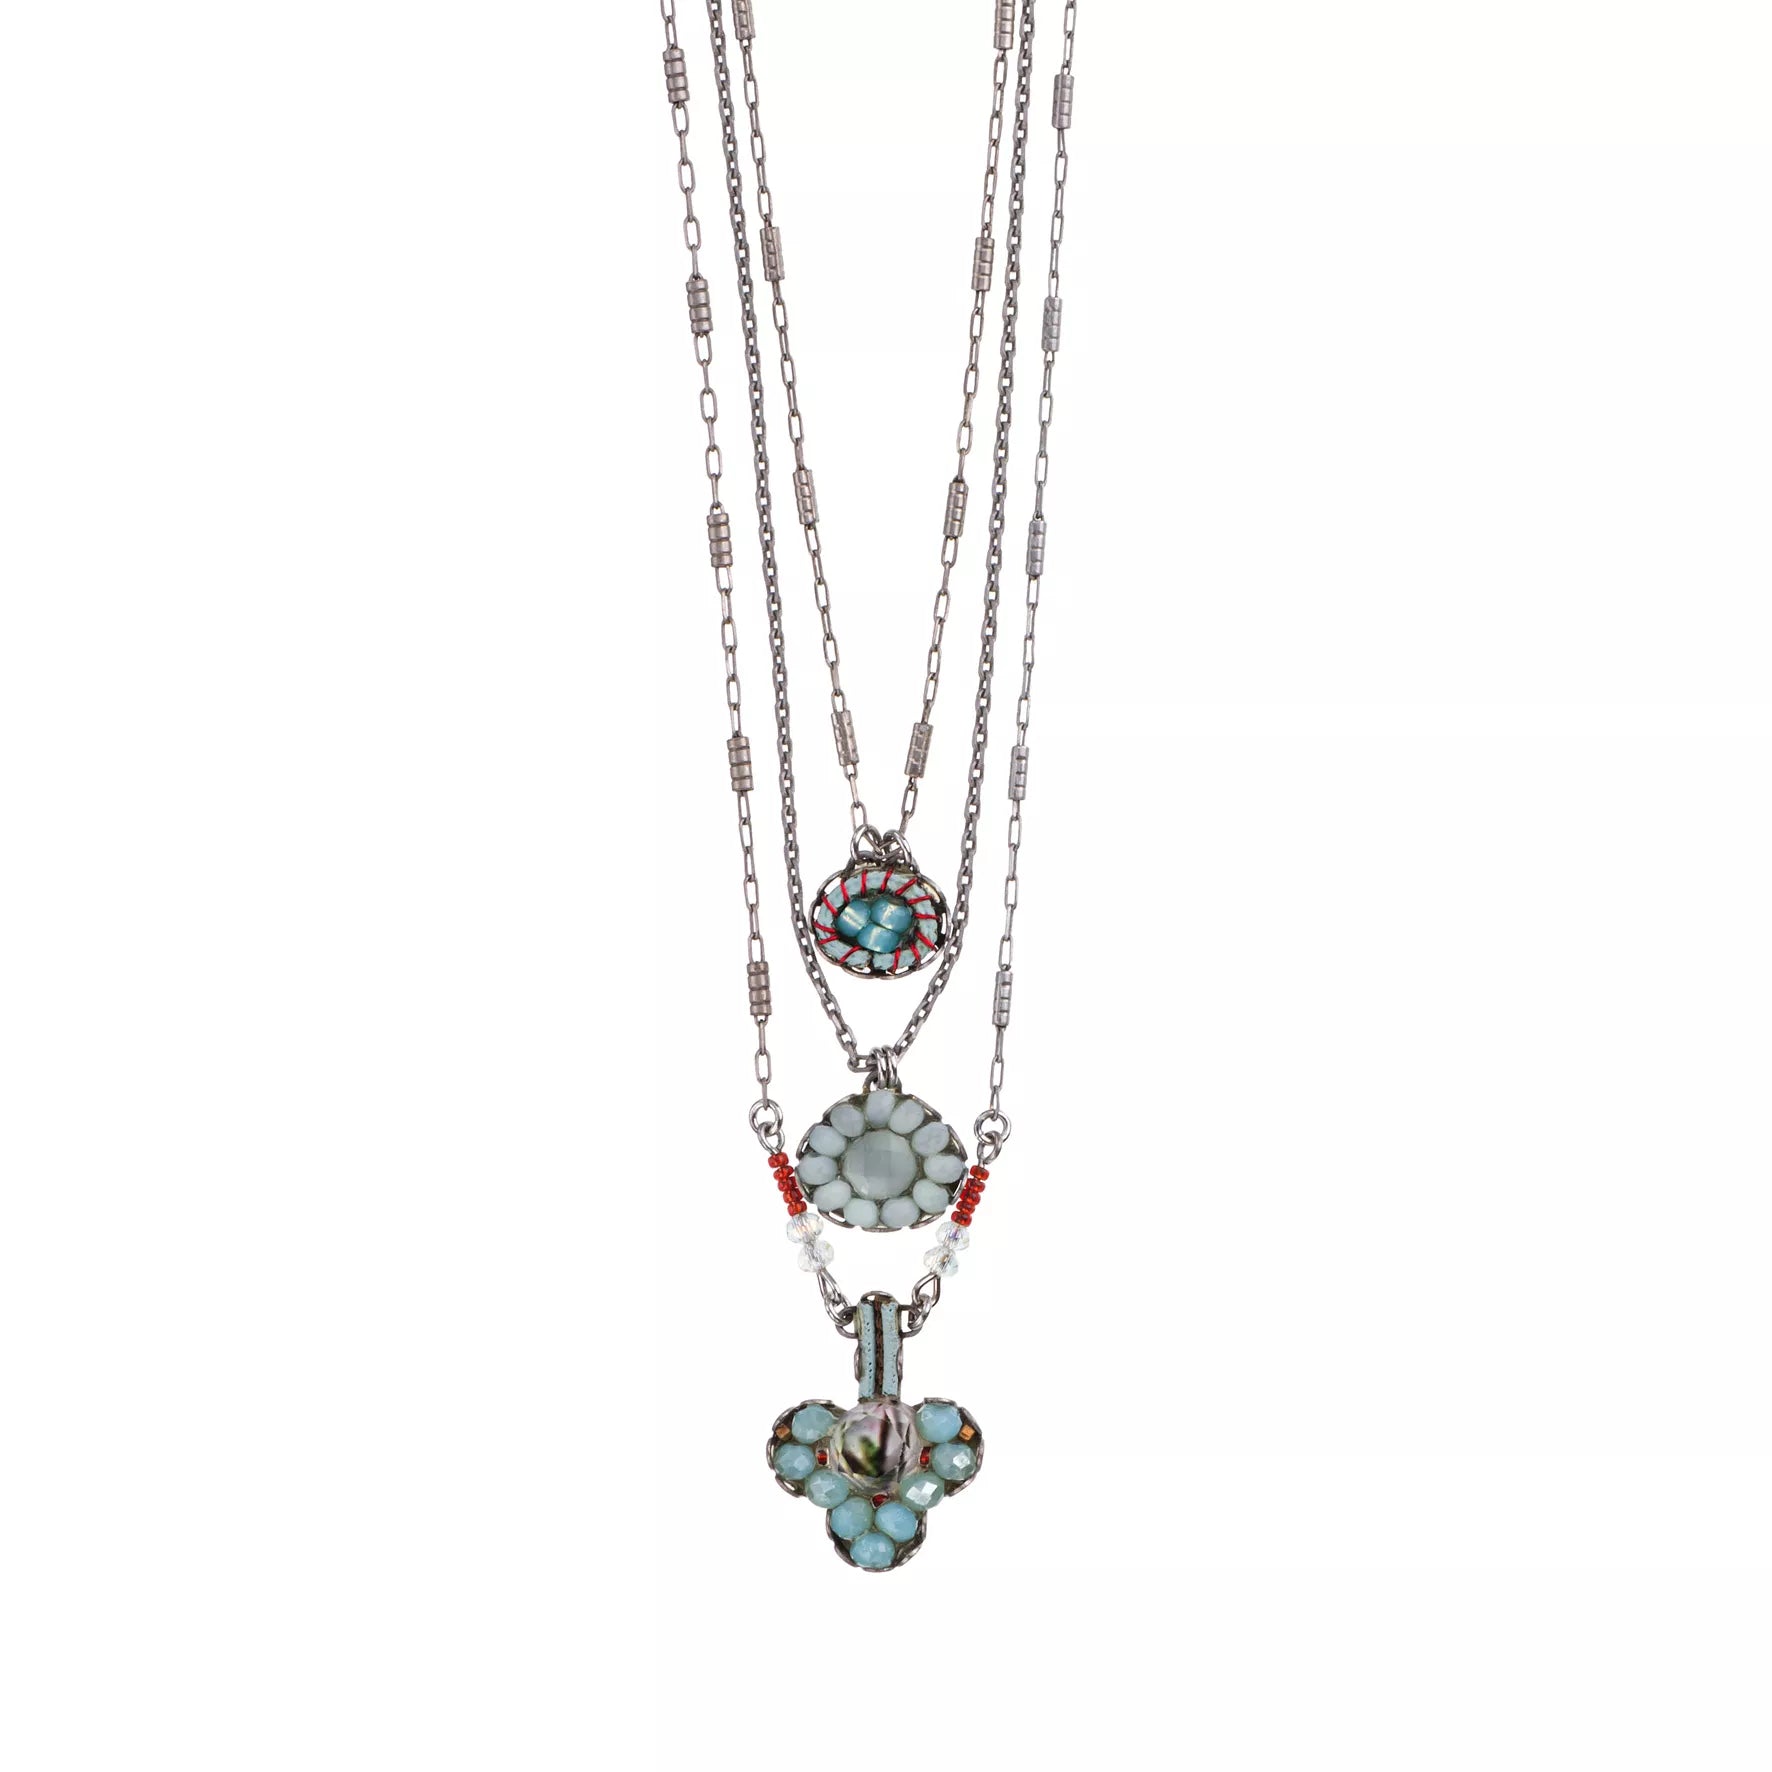 Mint Flavour Necklace - The Nancy Smillie Shop - Art, Jewellery & Designer Gifts Glasgow